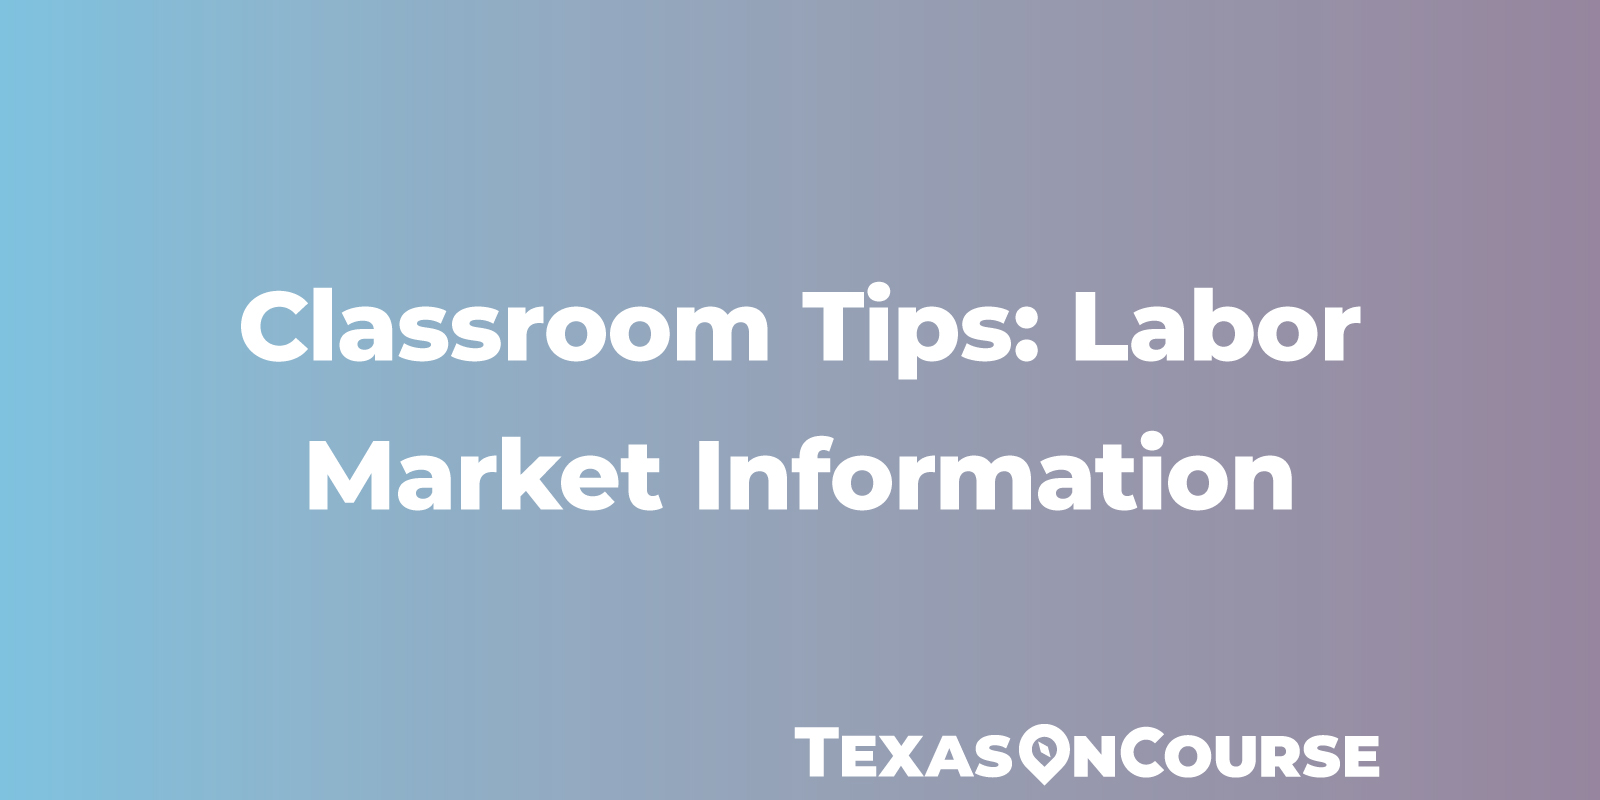 Classroom Tips: Labor Market Information